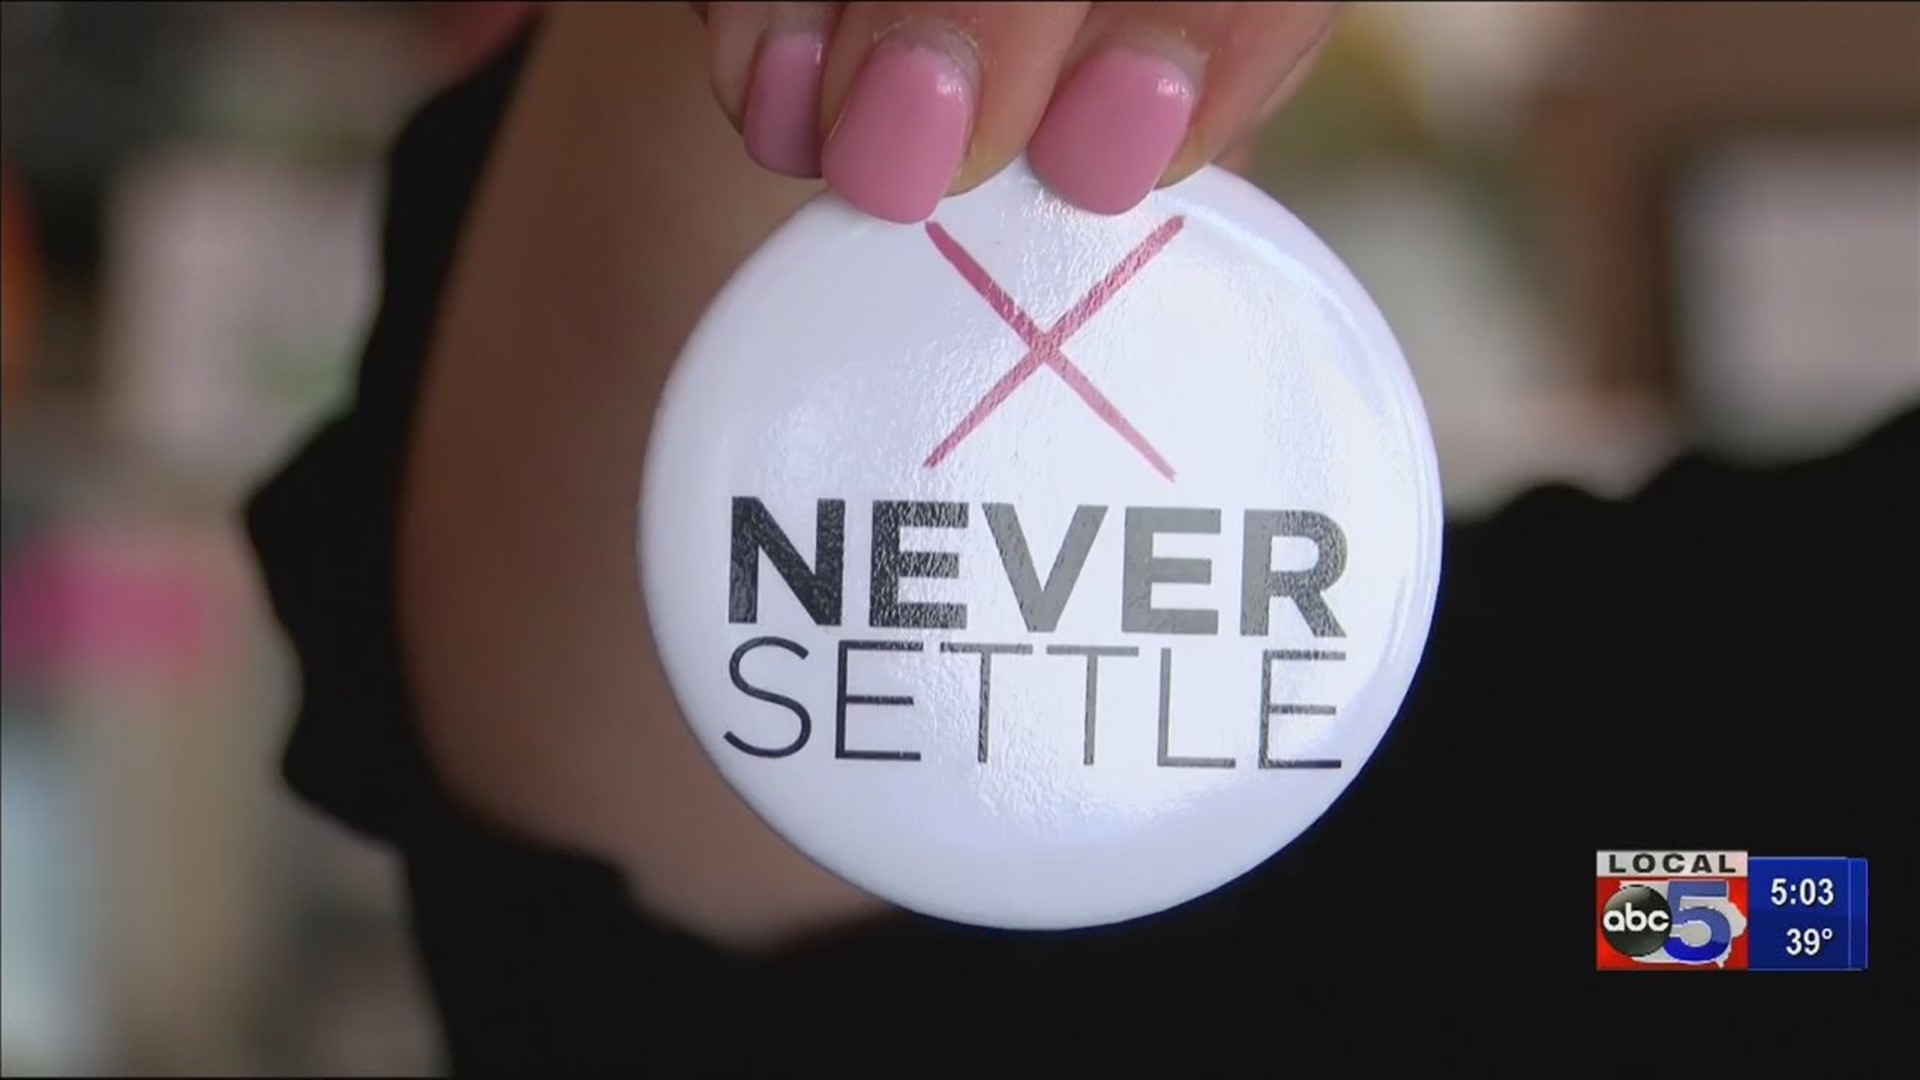 Iowa launching national movement encouraging women to "Never Settle"